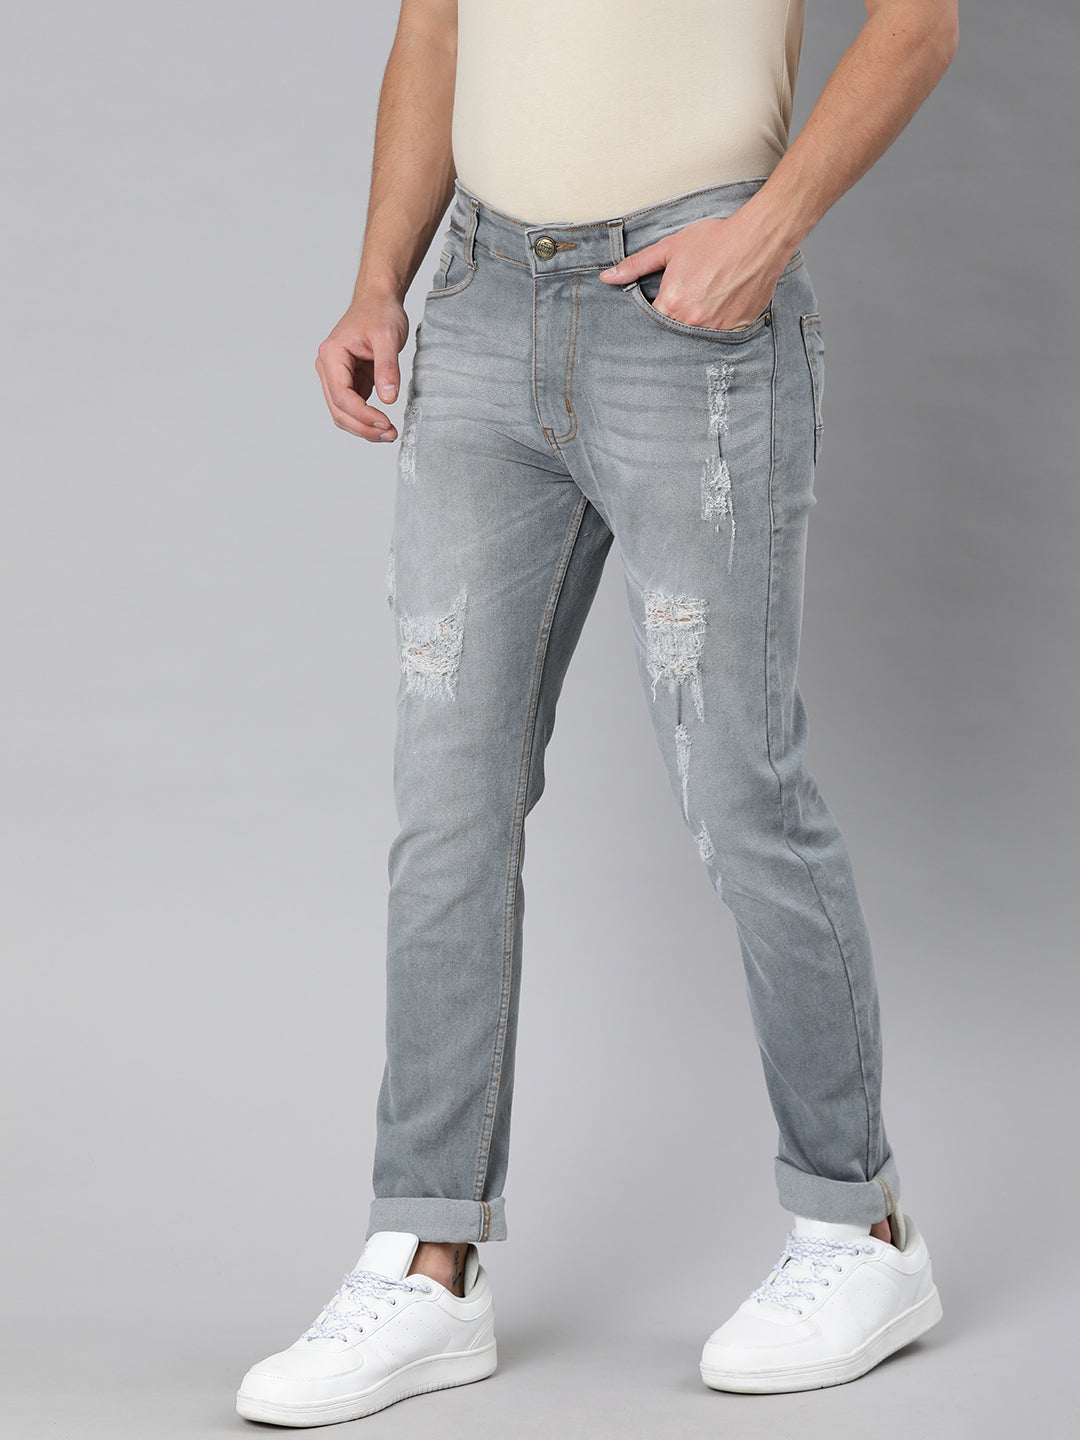 Men's Light Grey Slim Fit Heavy Distressed/Torn Jeans